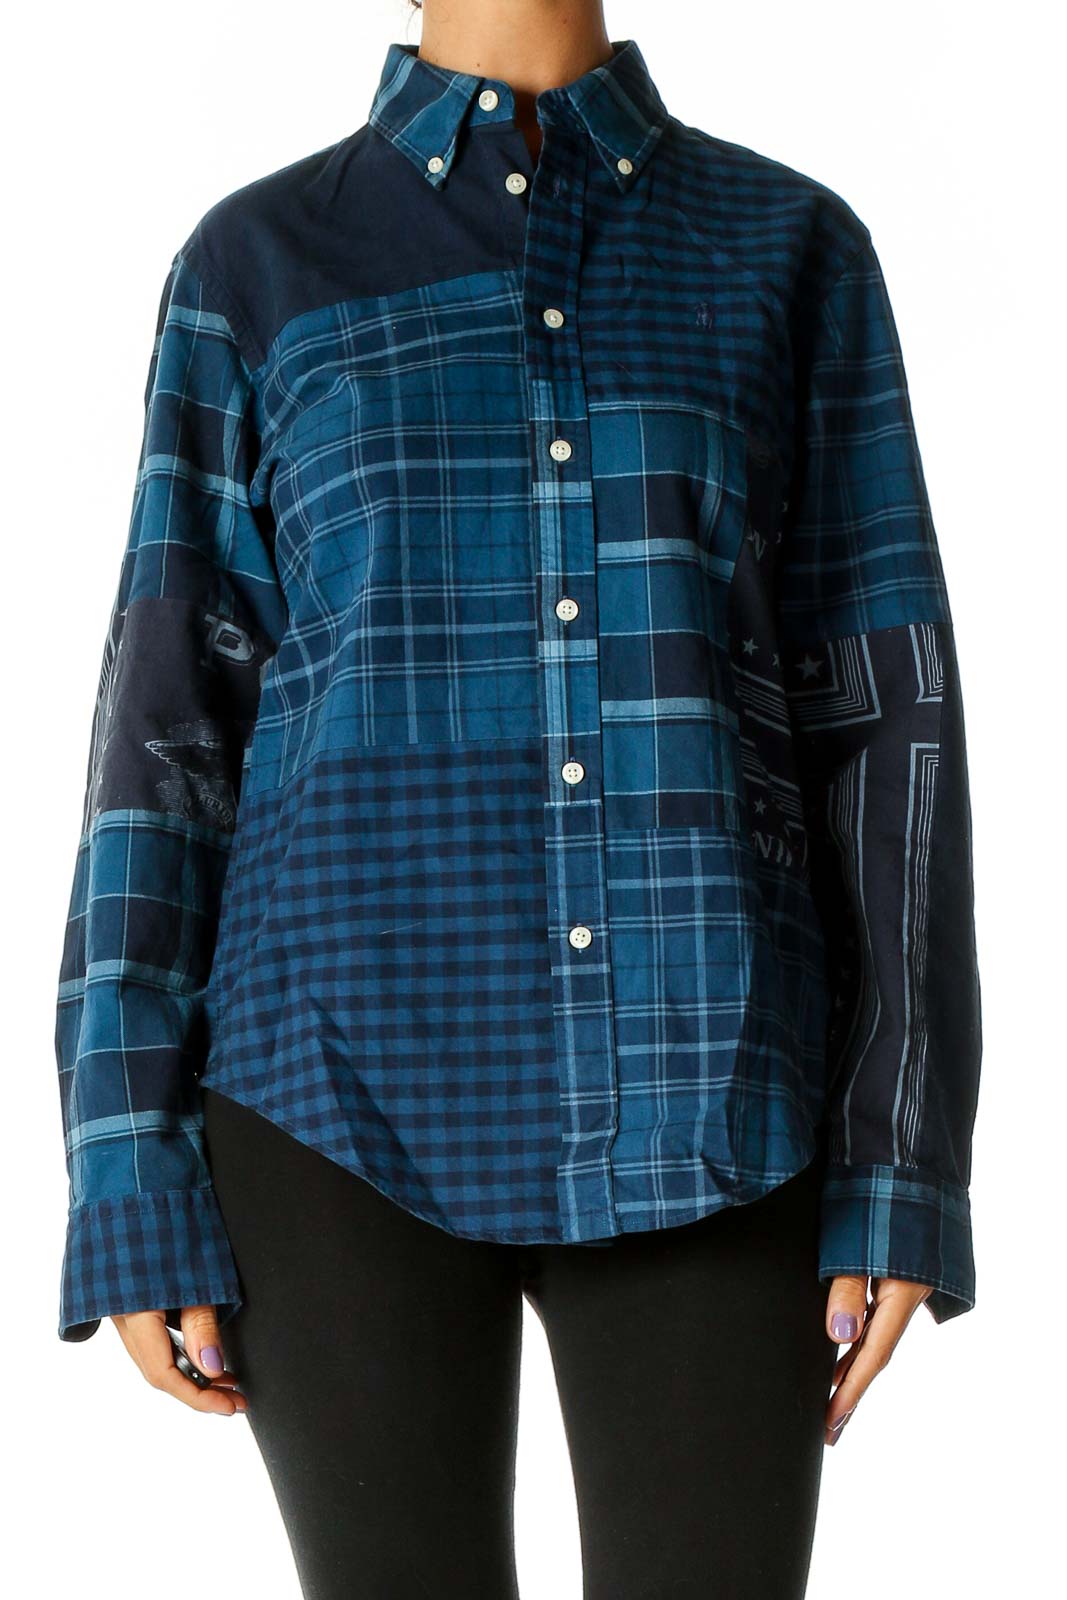 Blue Checkered Work Shirt Front